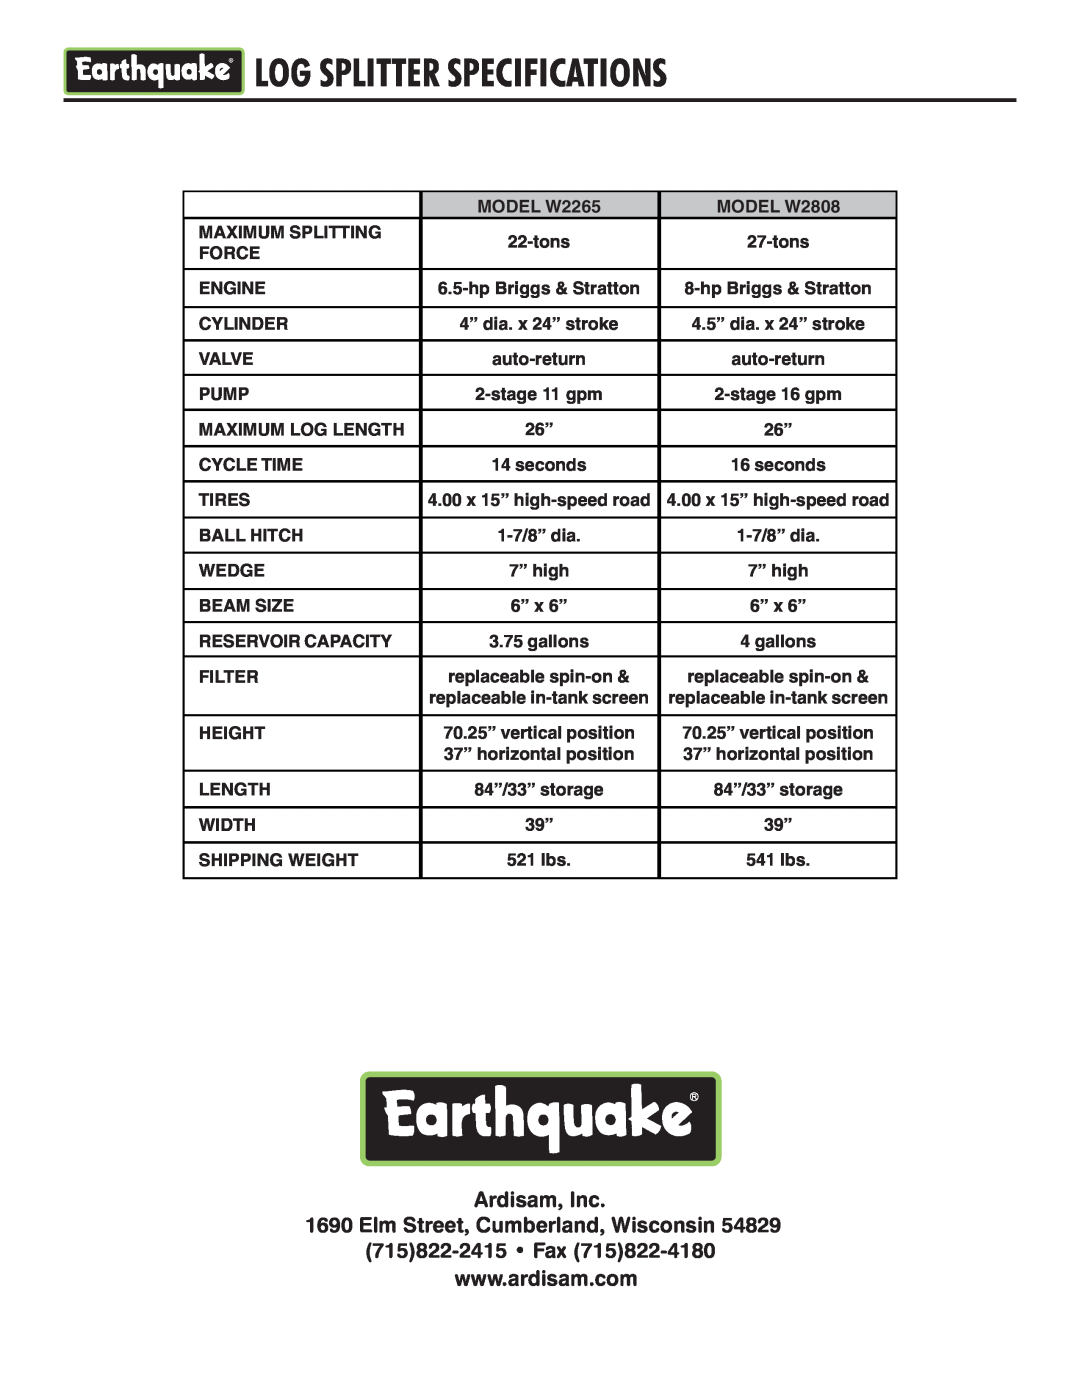 EarthQuake W2808, W2265 operating instructions Log Splitter Specifications, Ardisam, Inc, Elm Street, Cumberland, Wisconsin 